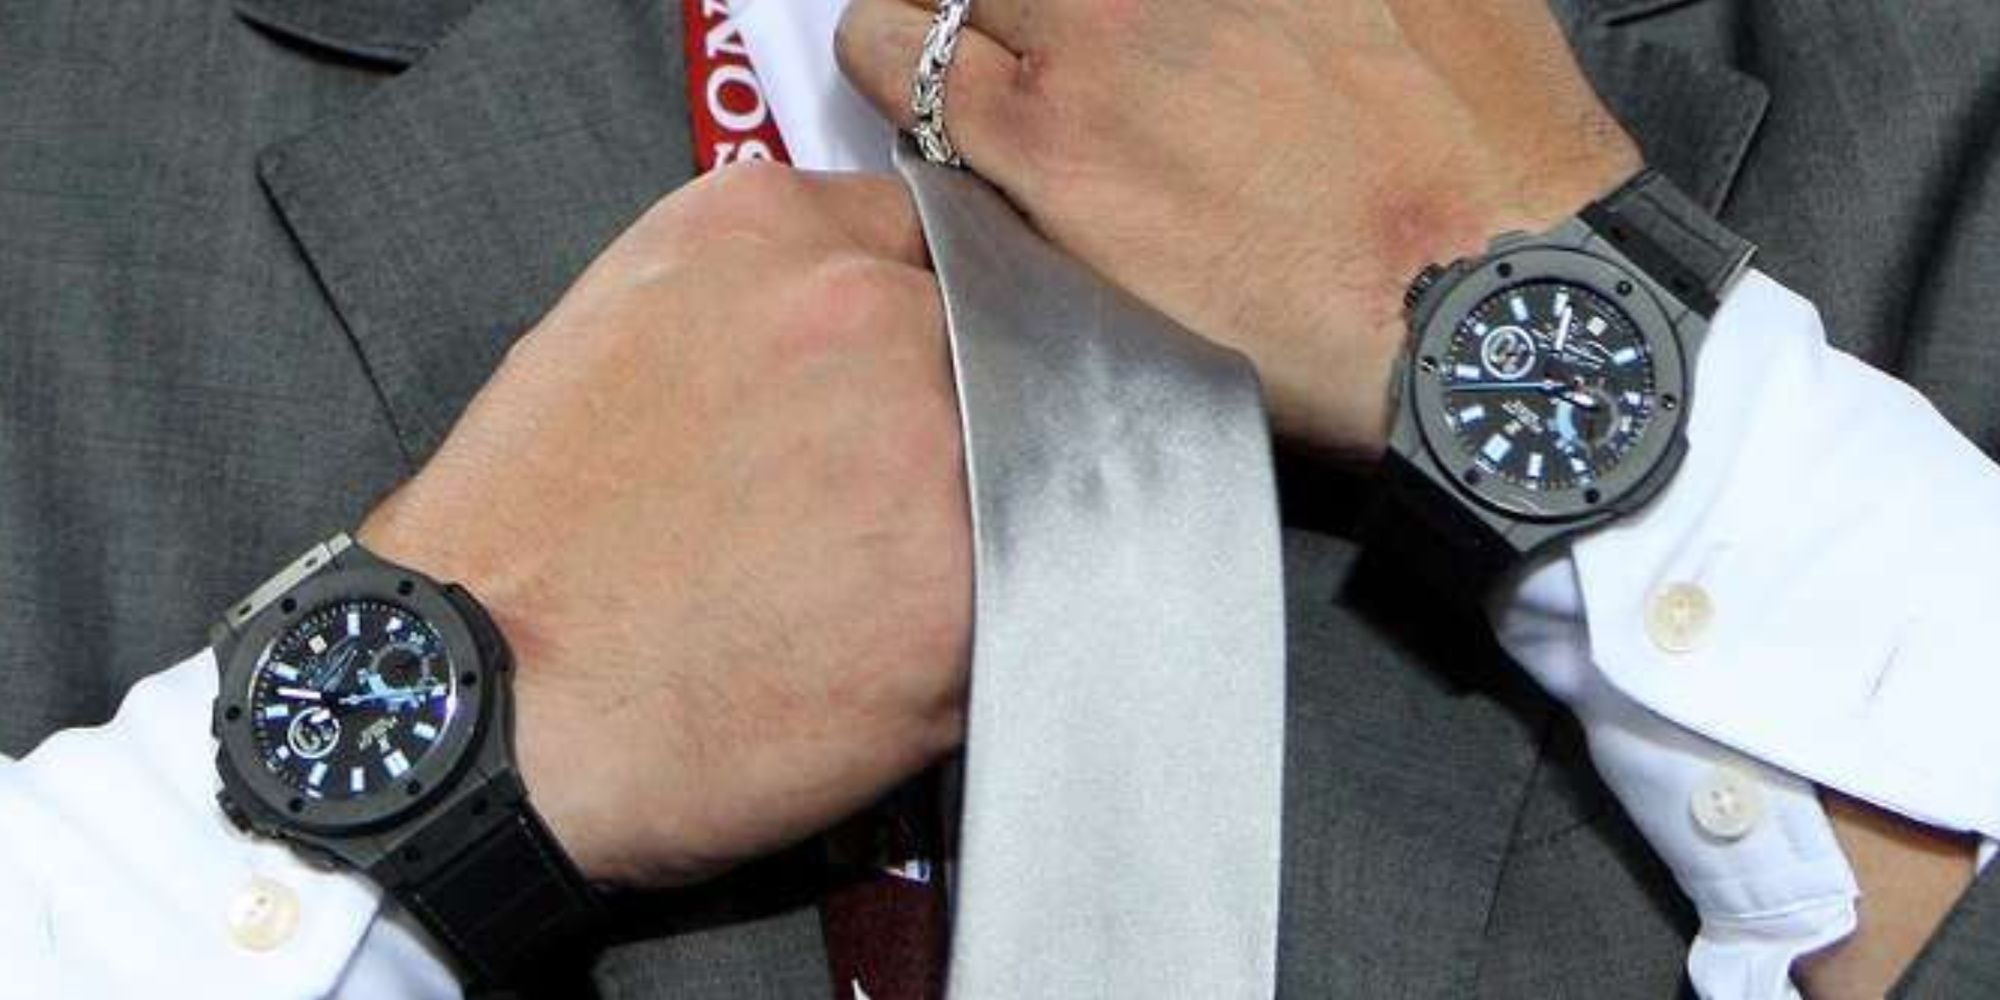 Maradona's two watches